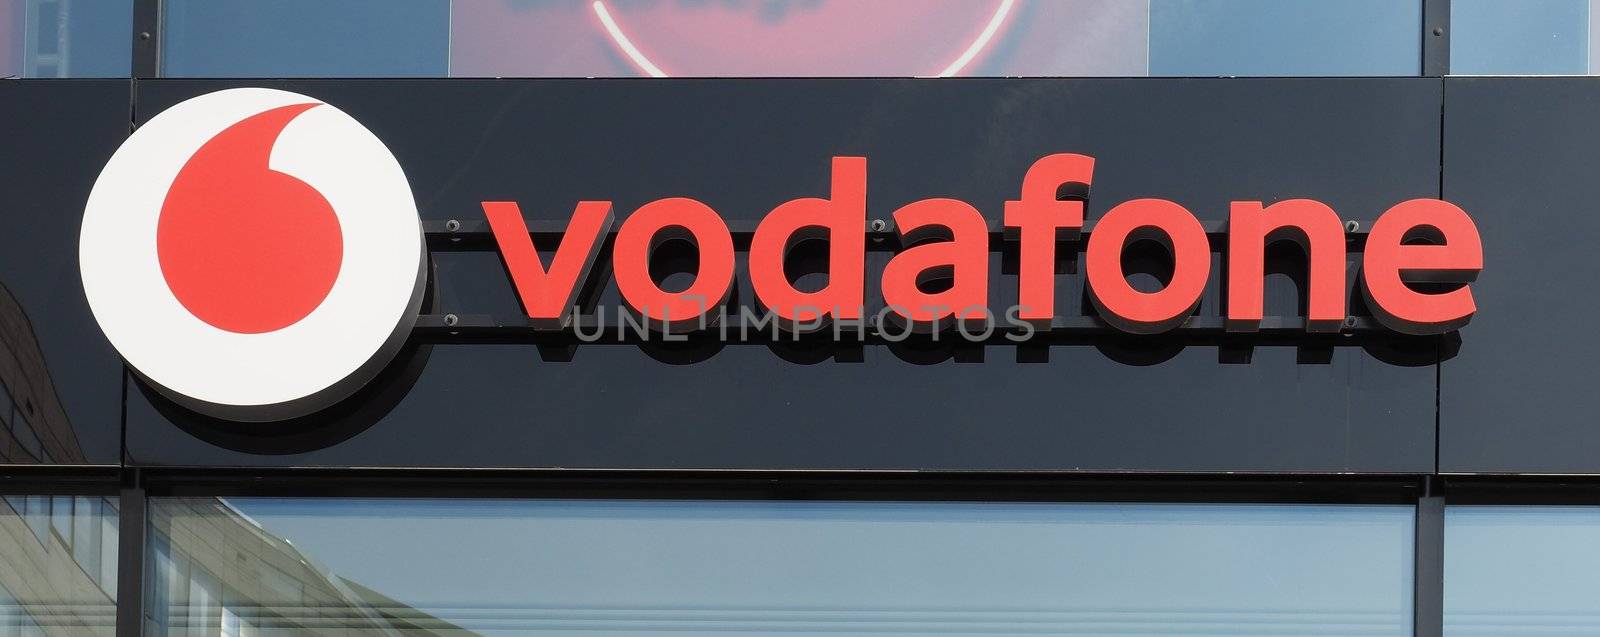 DUeSSELDORF - AUG 2019: Vodafone sign by claudiodivizia